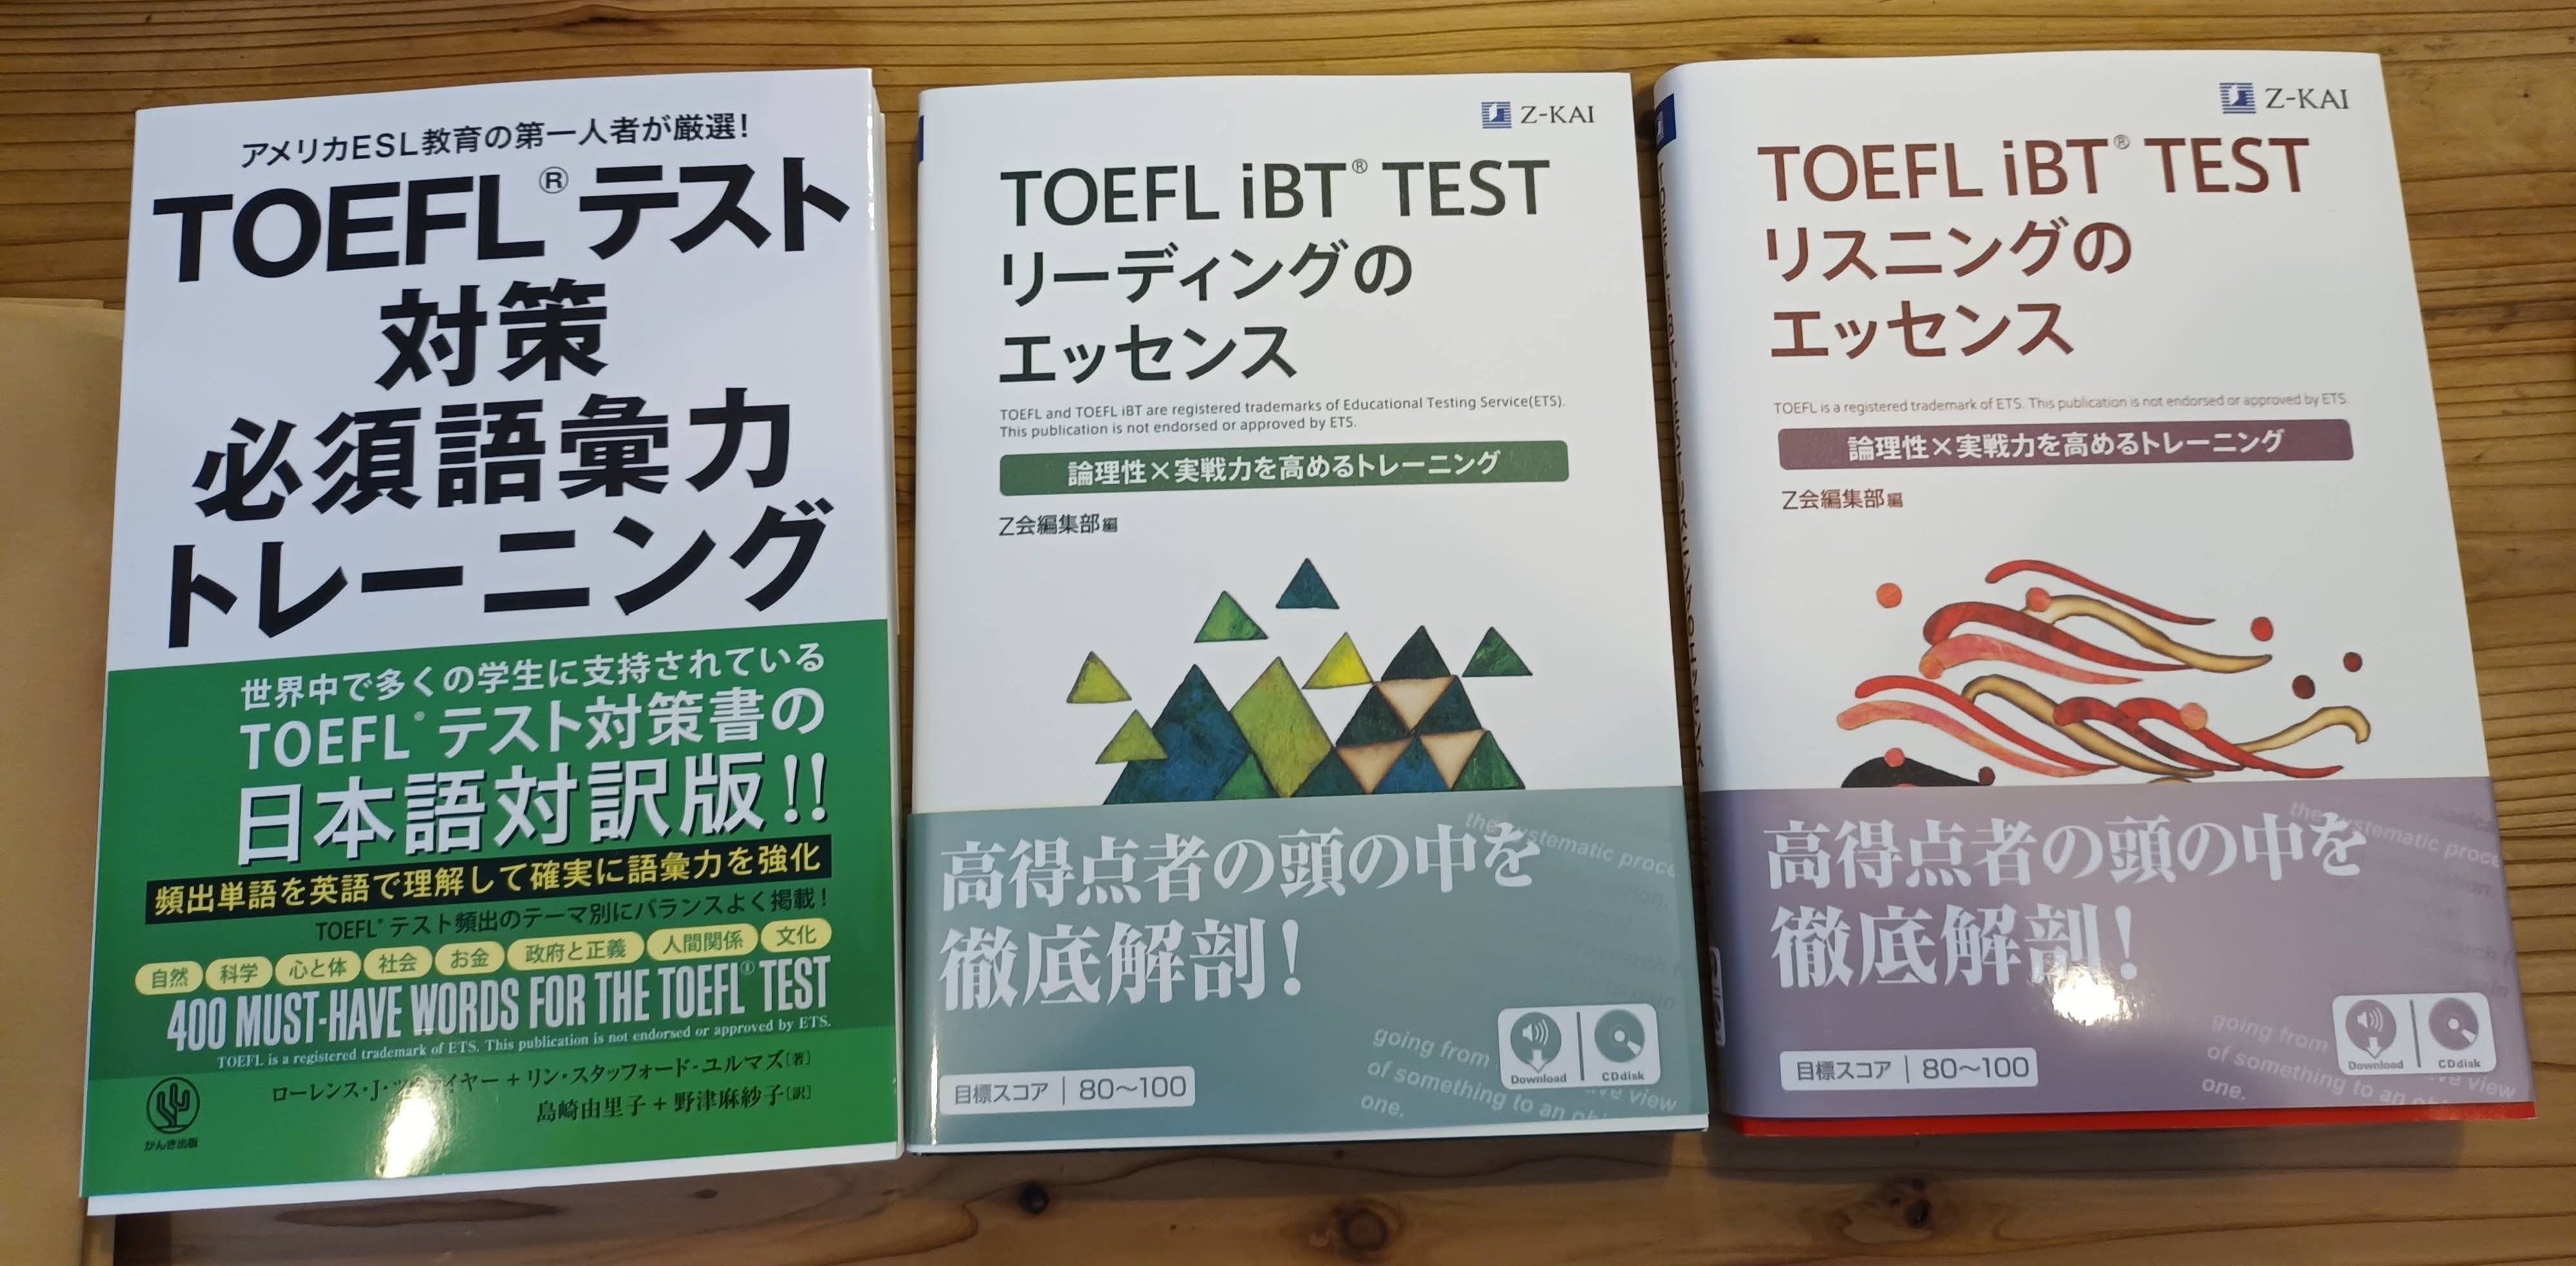 TOEFL books